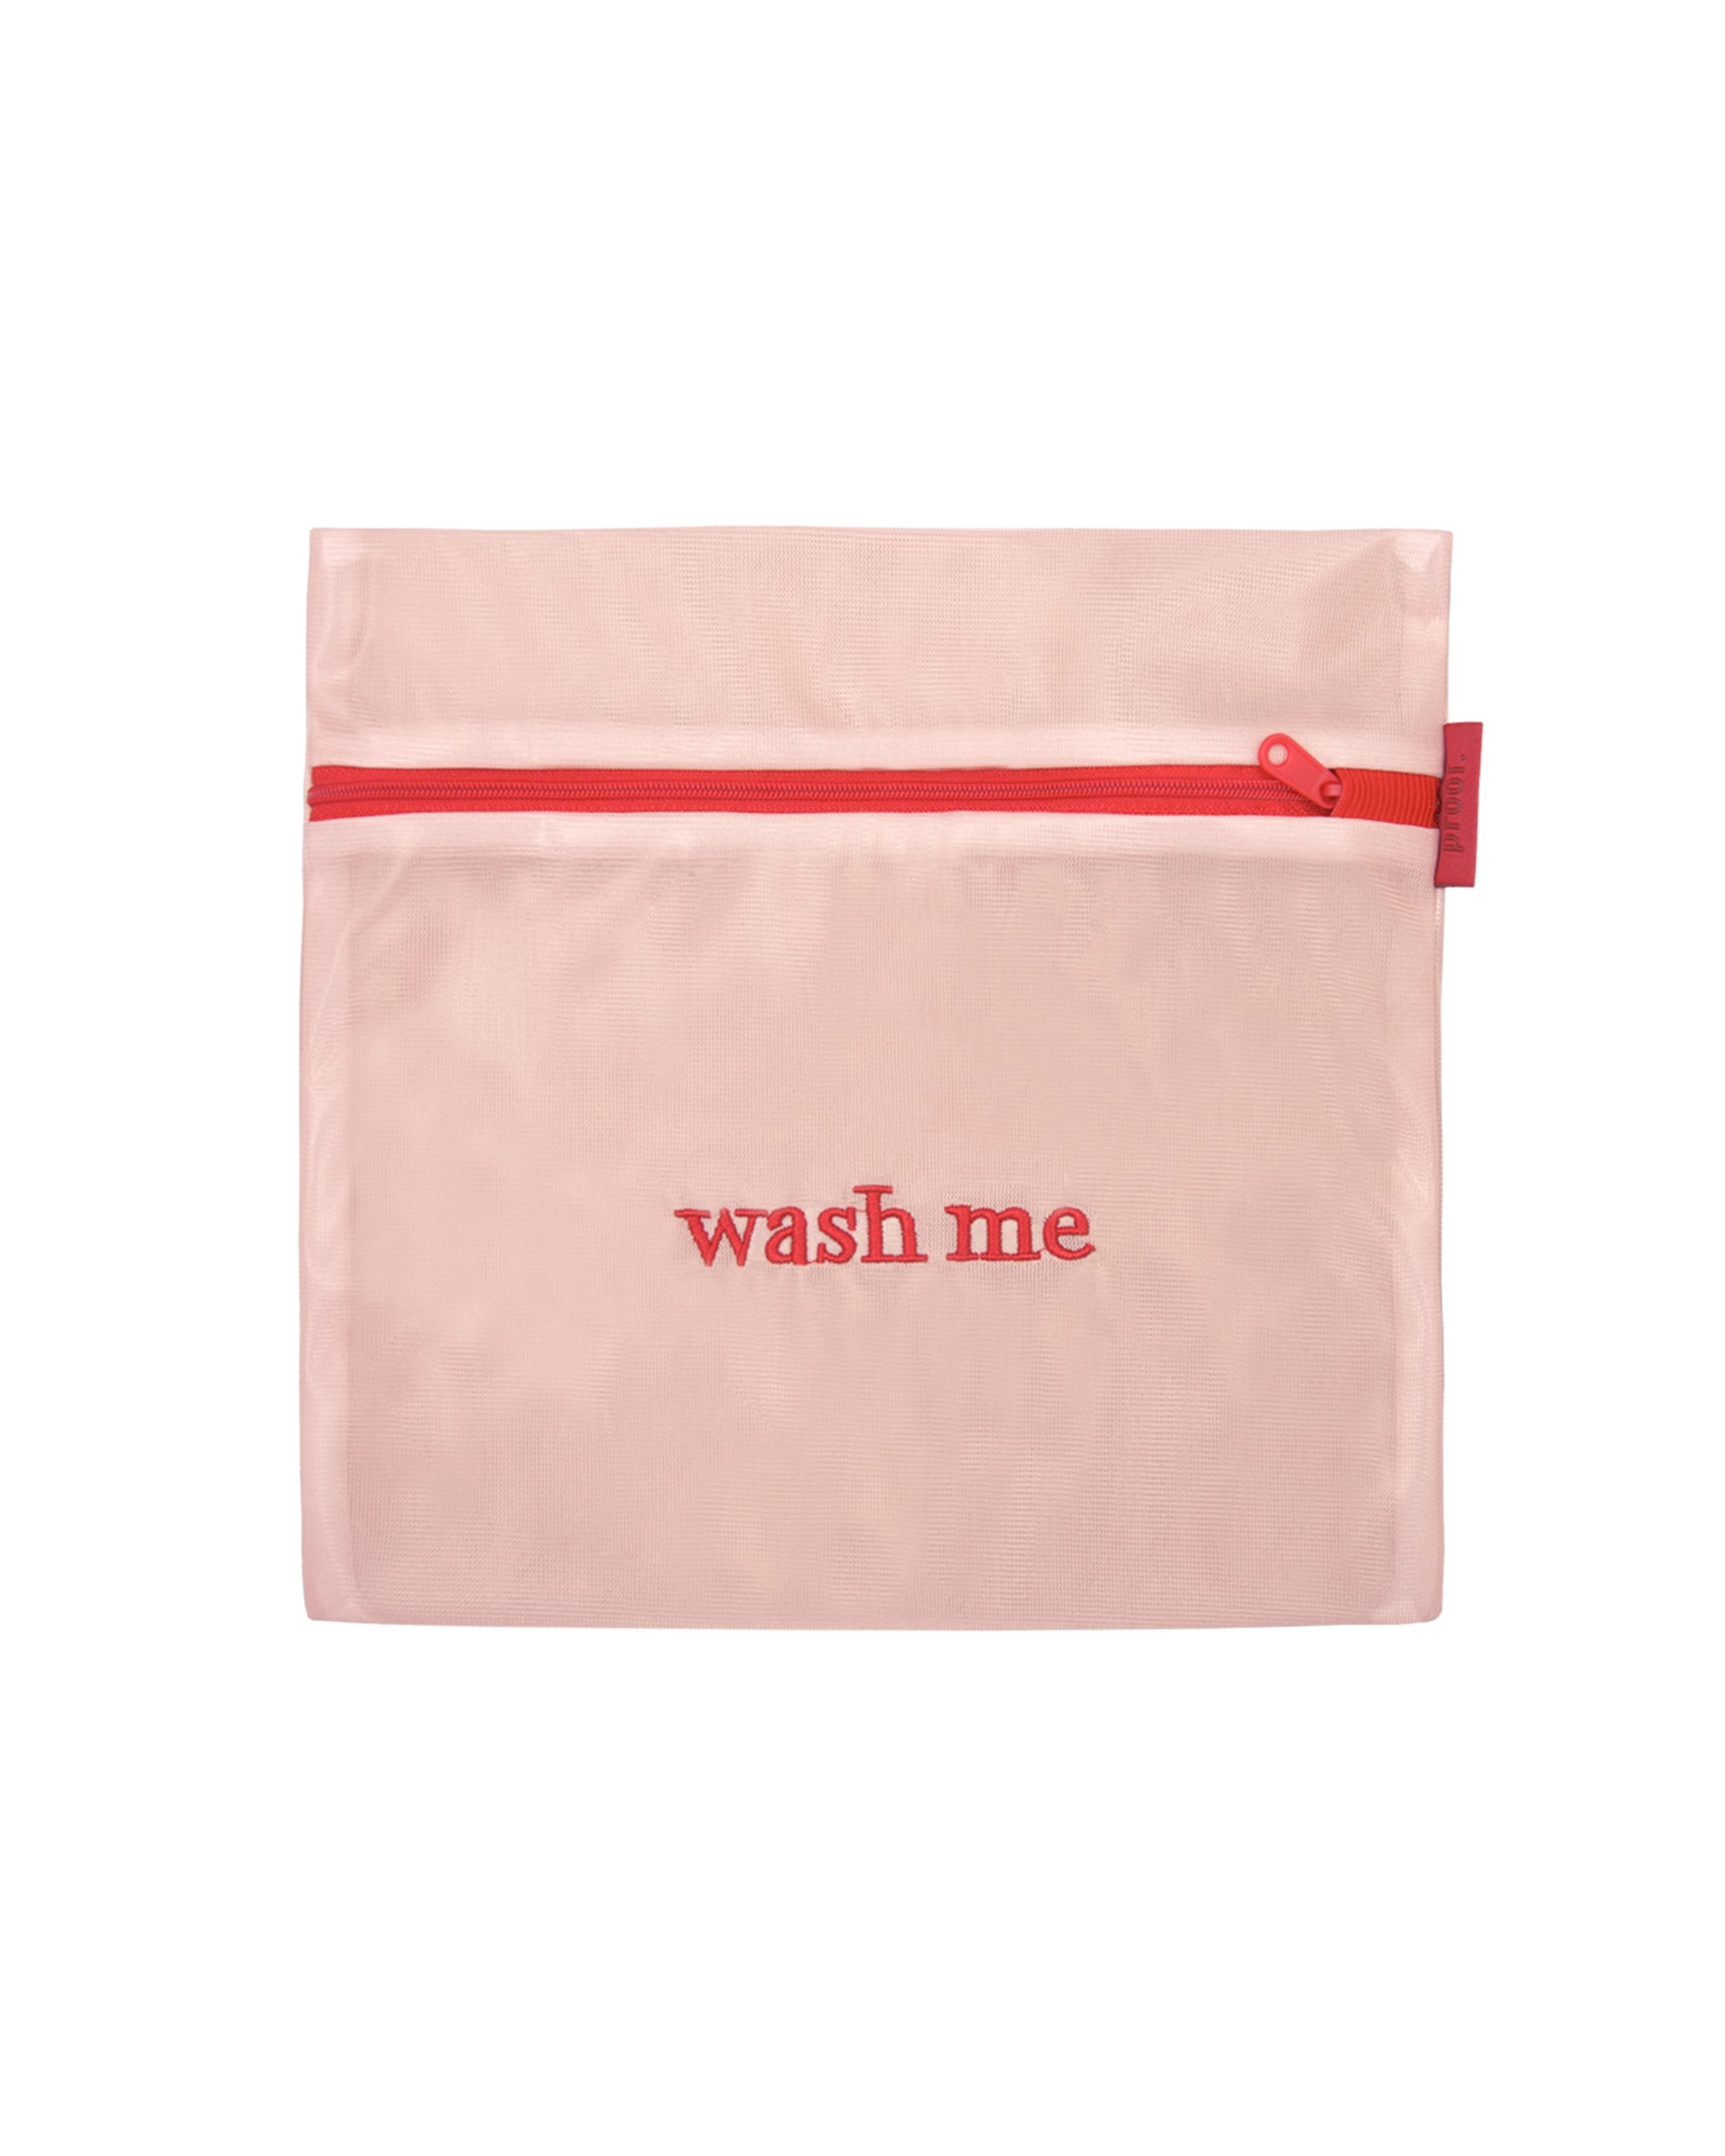 Mesh Laundry Bag For Washing Period Underwear